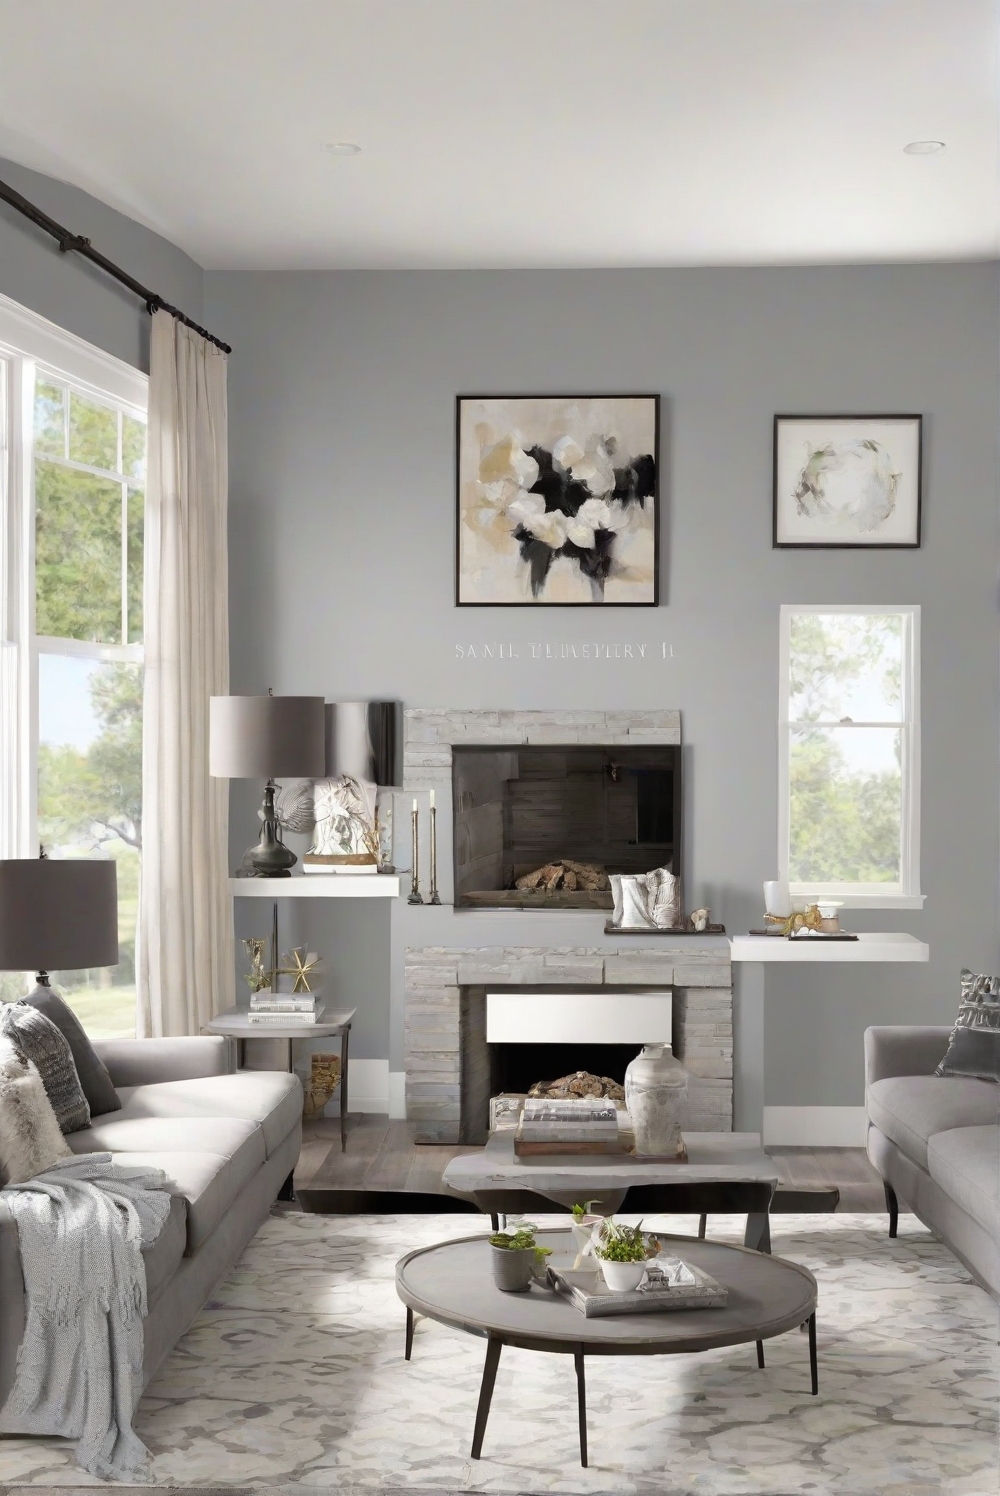 interior design, kitchen design, living room design, wall paint, home decorating, home decor, paint color match